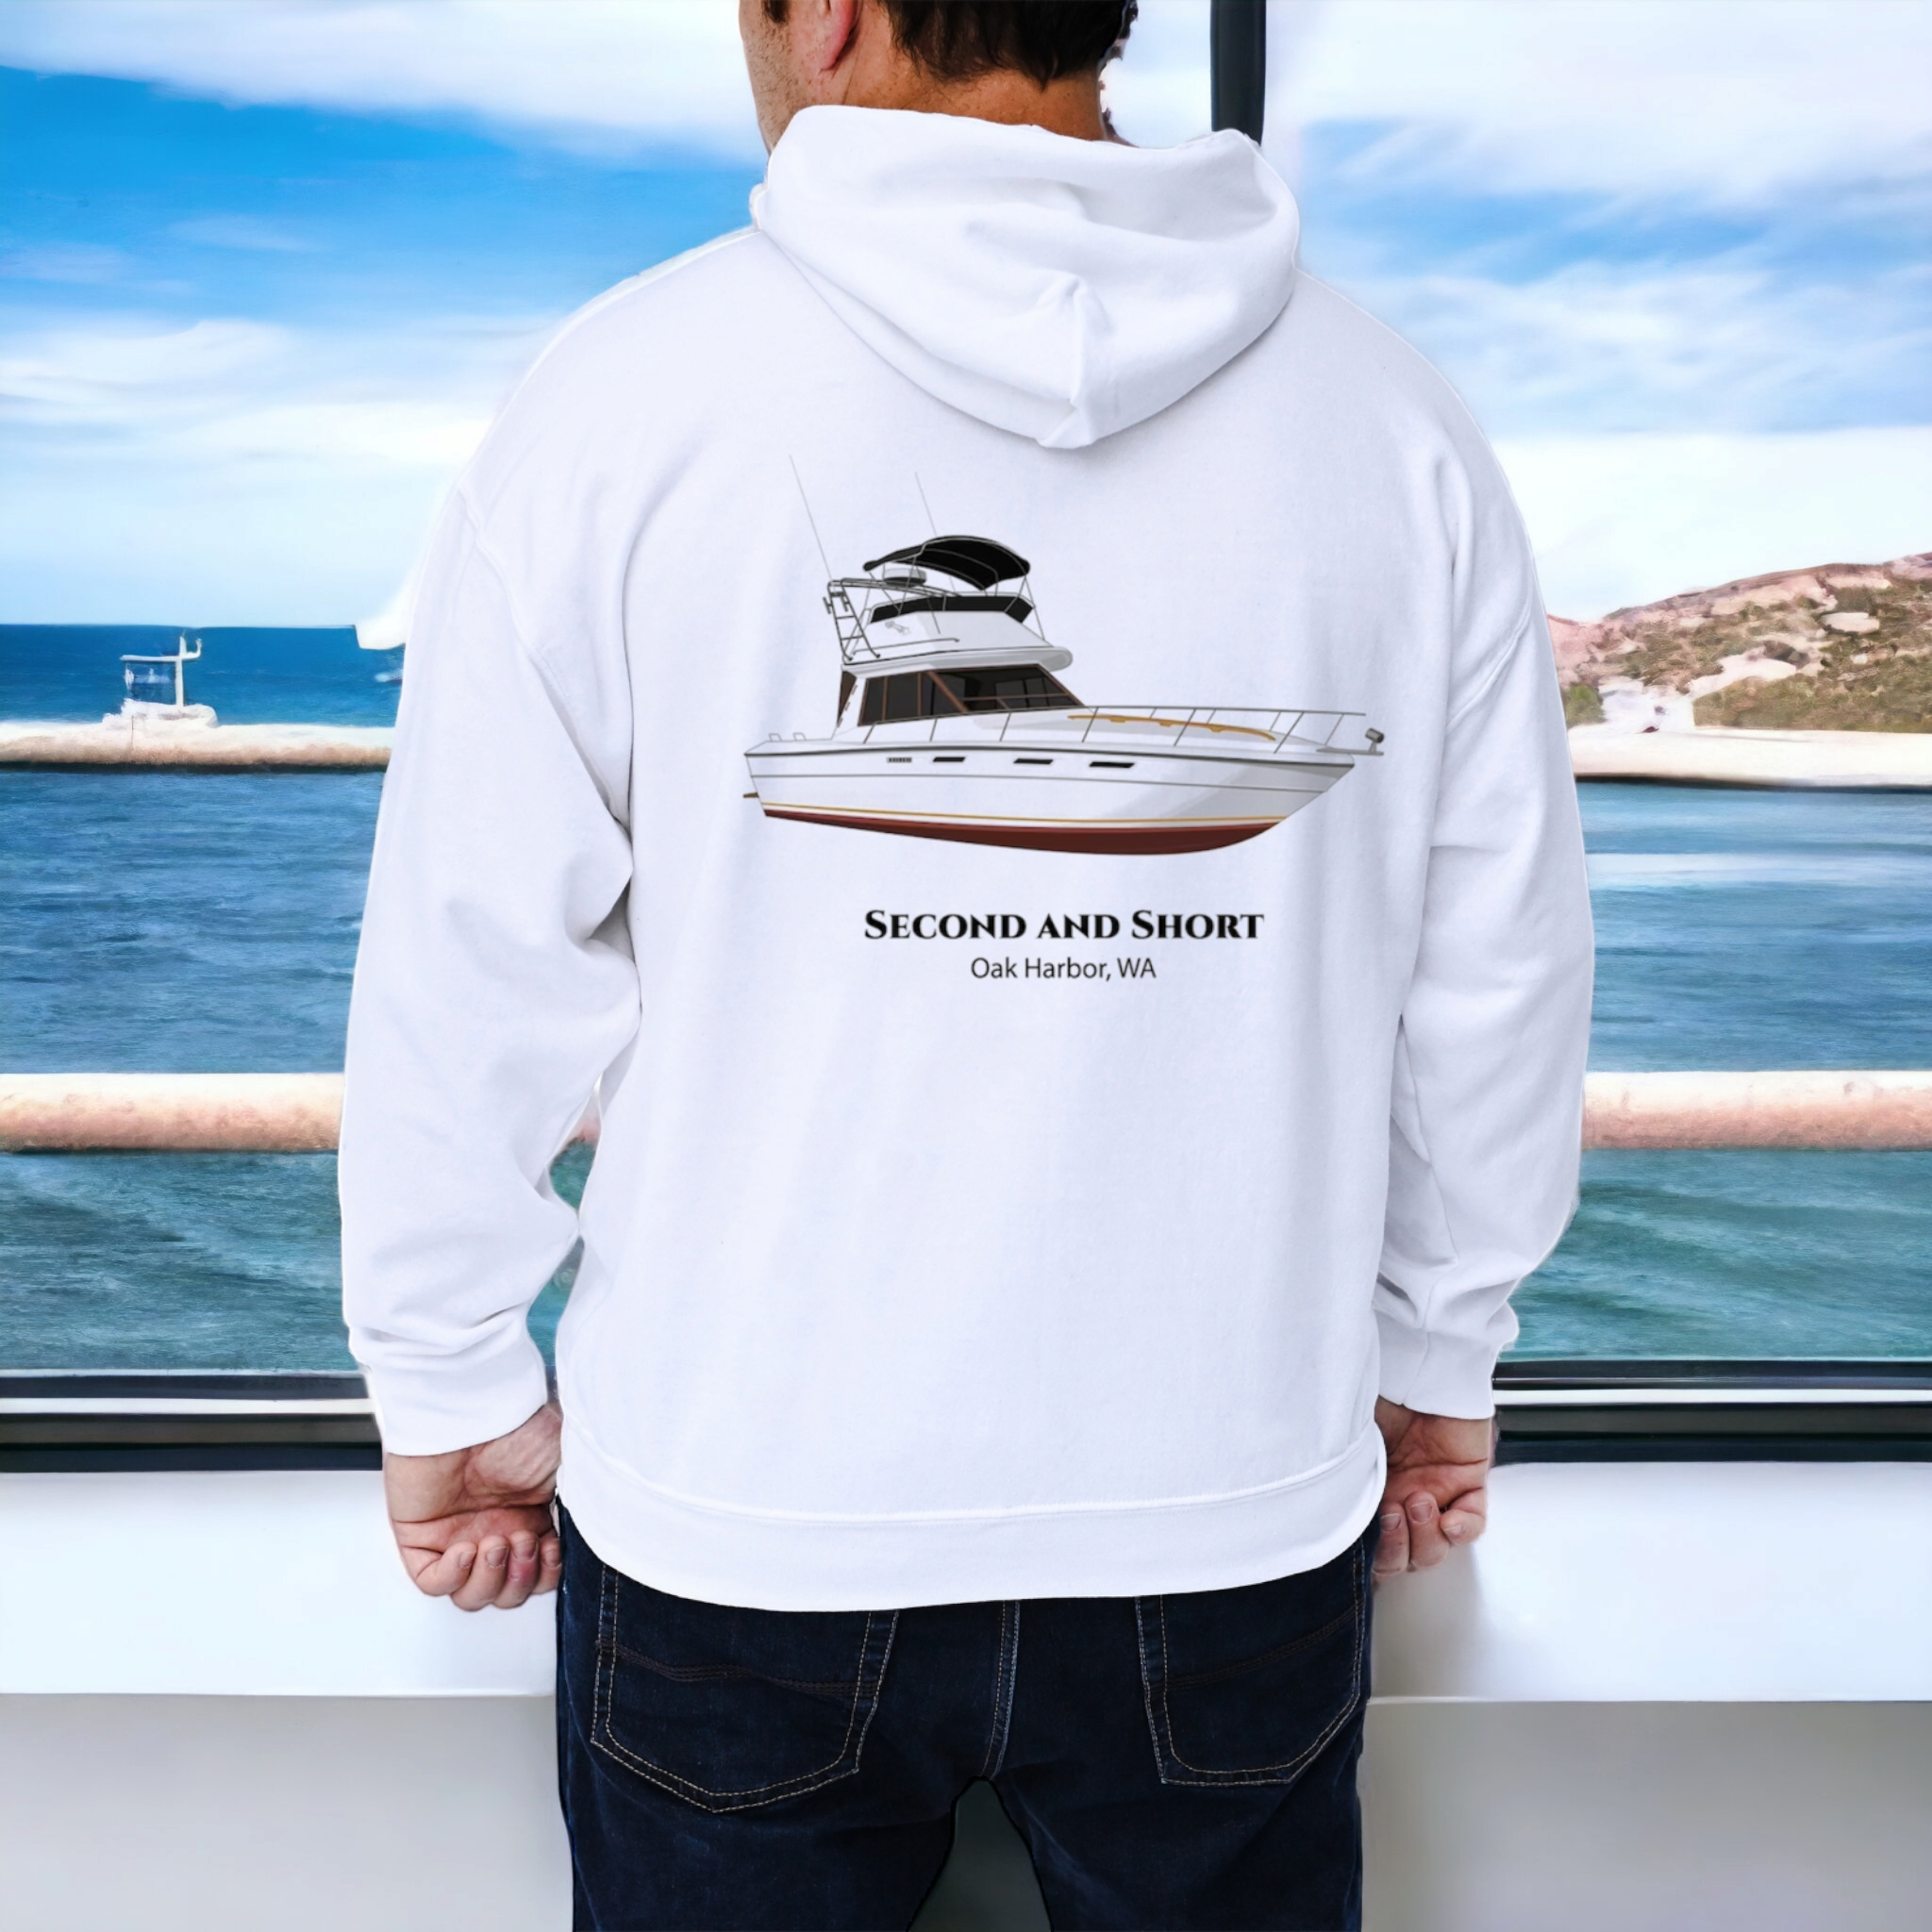 Premium Fit Boat T-shirts, Custom Boating Apparel